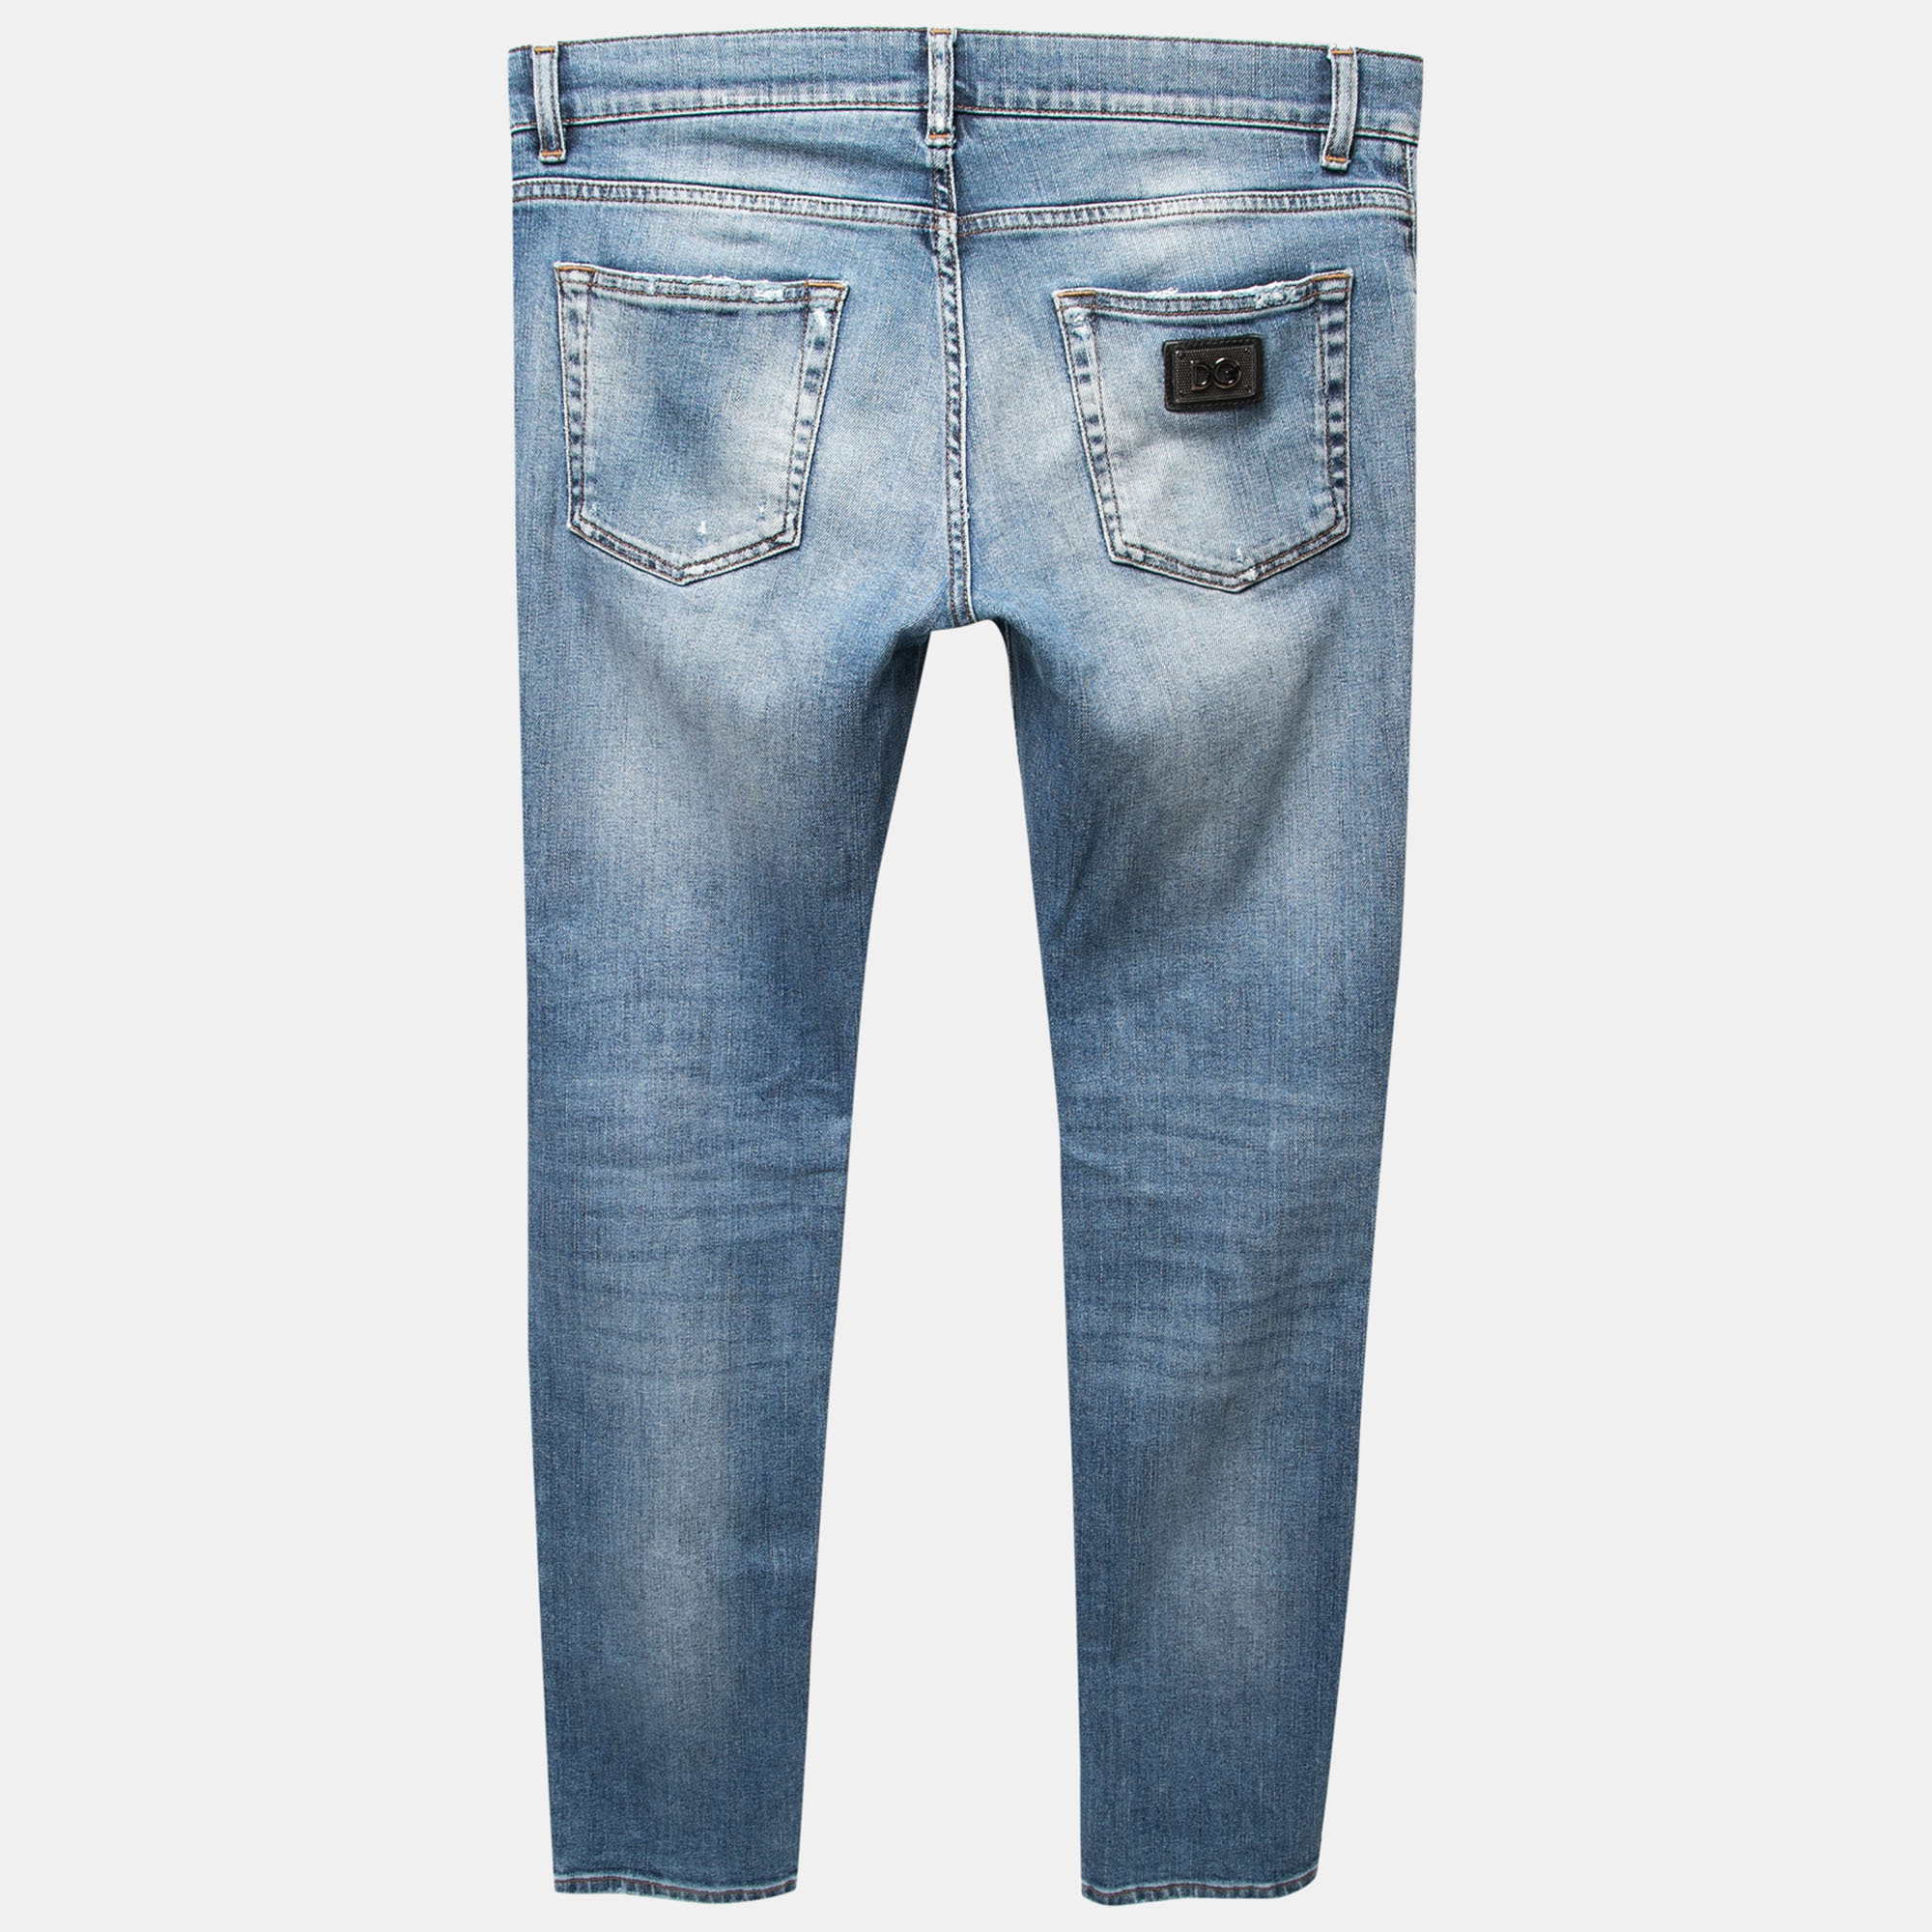 

Dolce & Gabbana Blue Denim Skinny Jeans  Waist 33